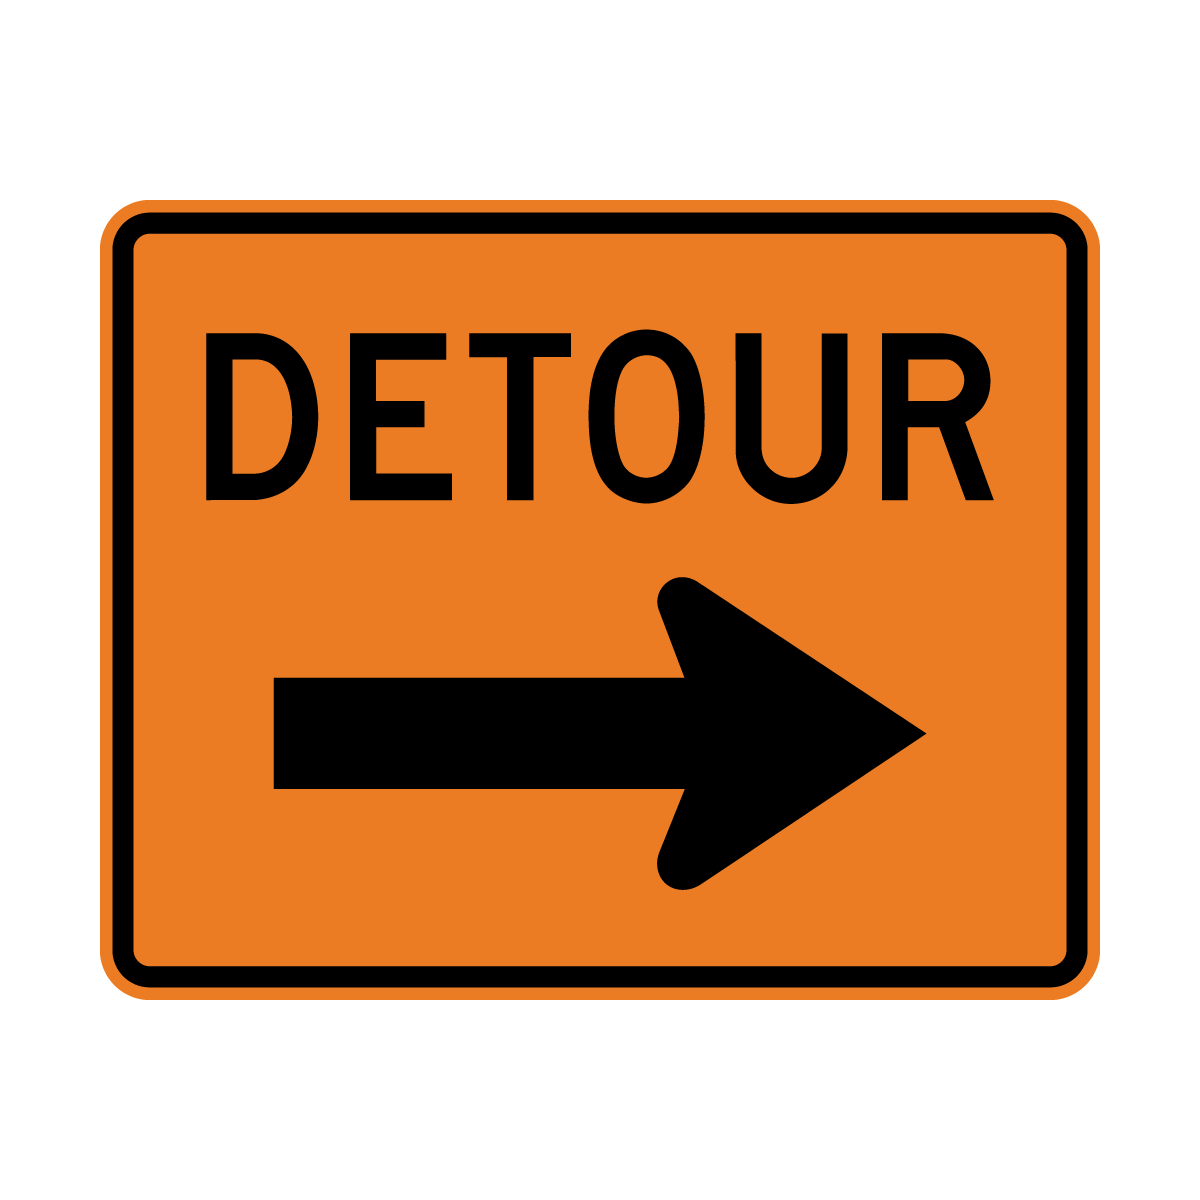 M4-9 Detour (Left or Right)